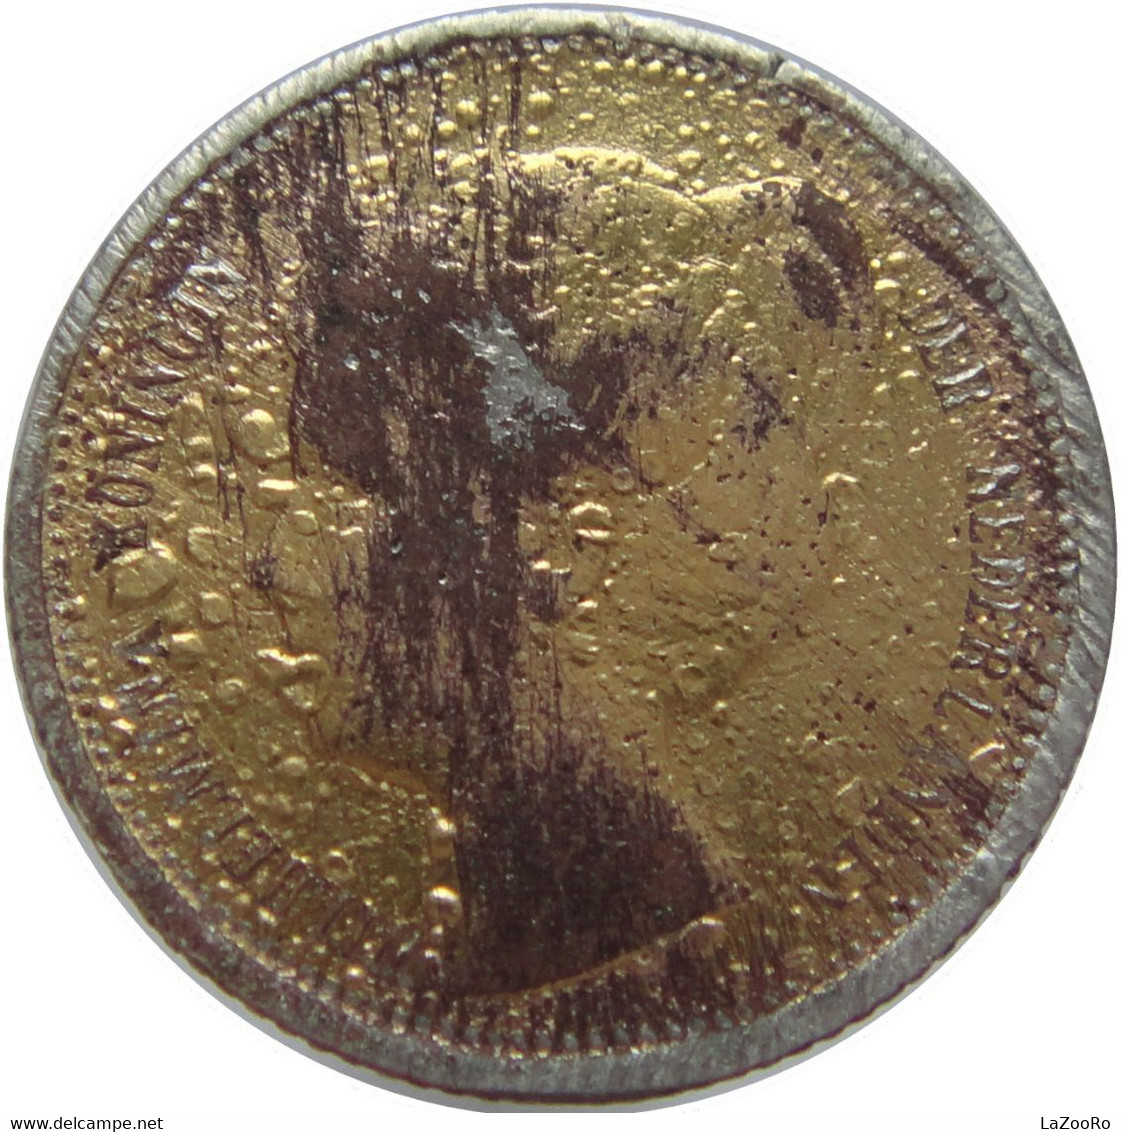 LaZooRo: Curaçao 1/10 Gulden 1901 VF Gold Plated - Silver - Curaçao